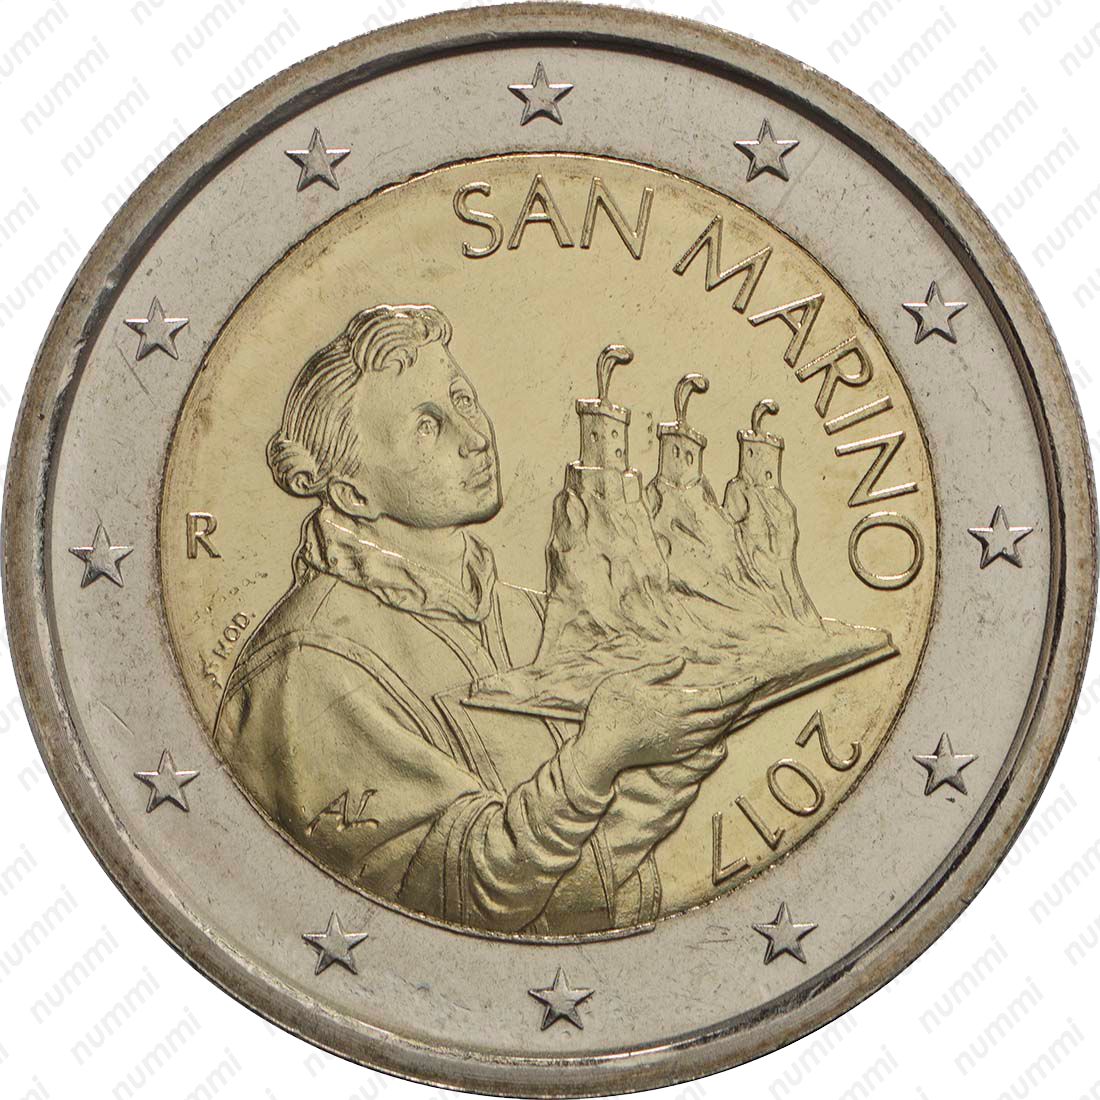 Сан марино 2. Монеты евро Сан-Марино. Монеты 2 евро Сан Марино. 2 Евро Сан-Марино 2017. Монета 2 евро 2017 год Сан Марино.